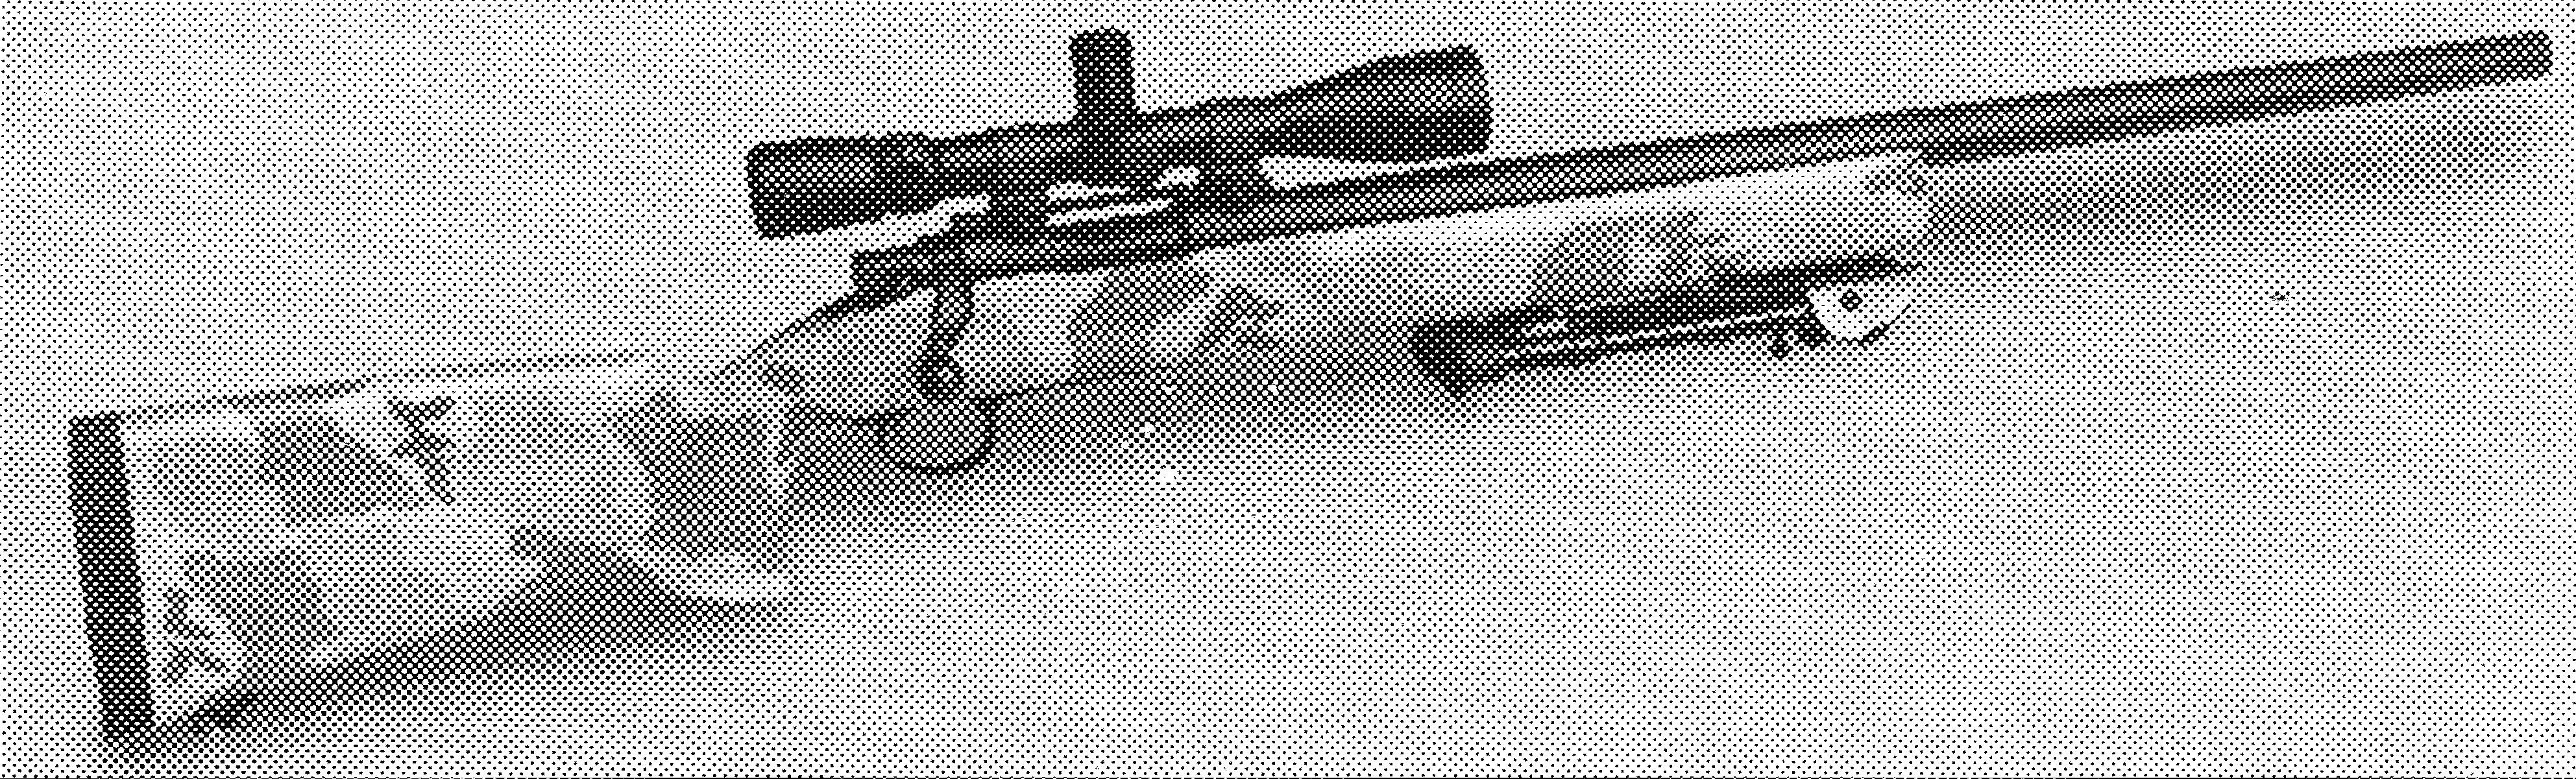 Model 86 Sniper's Rifle